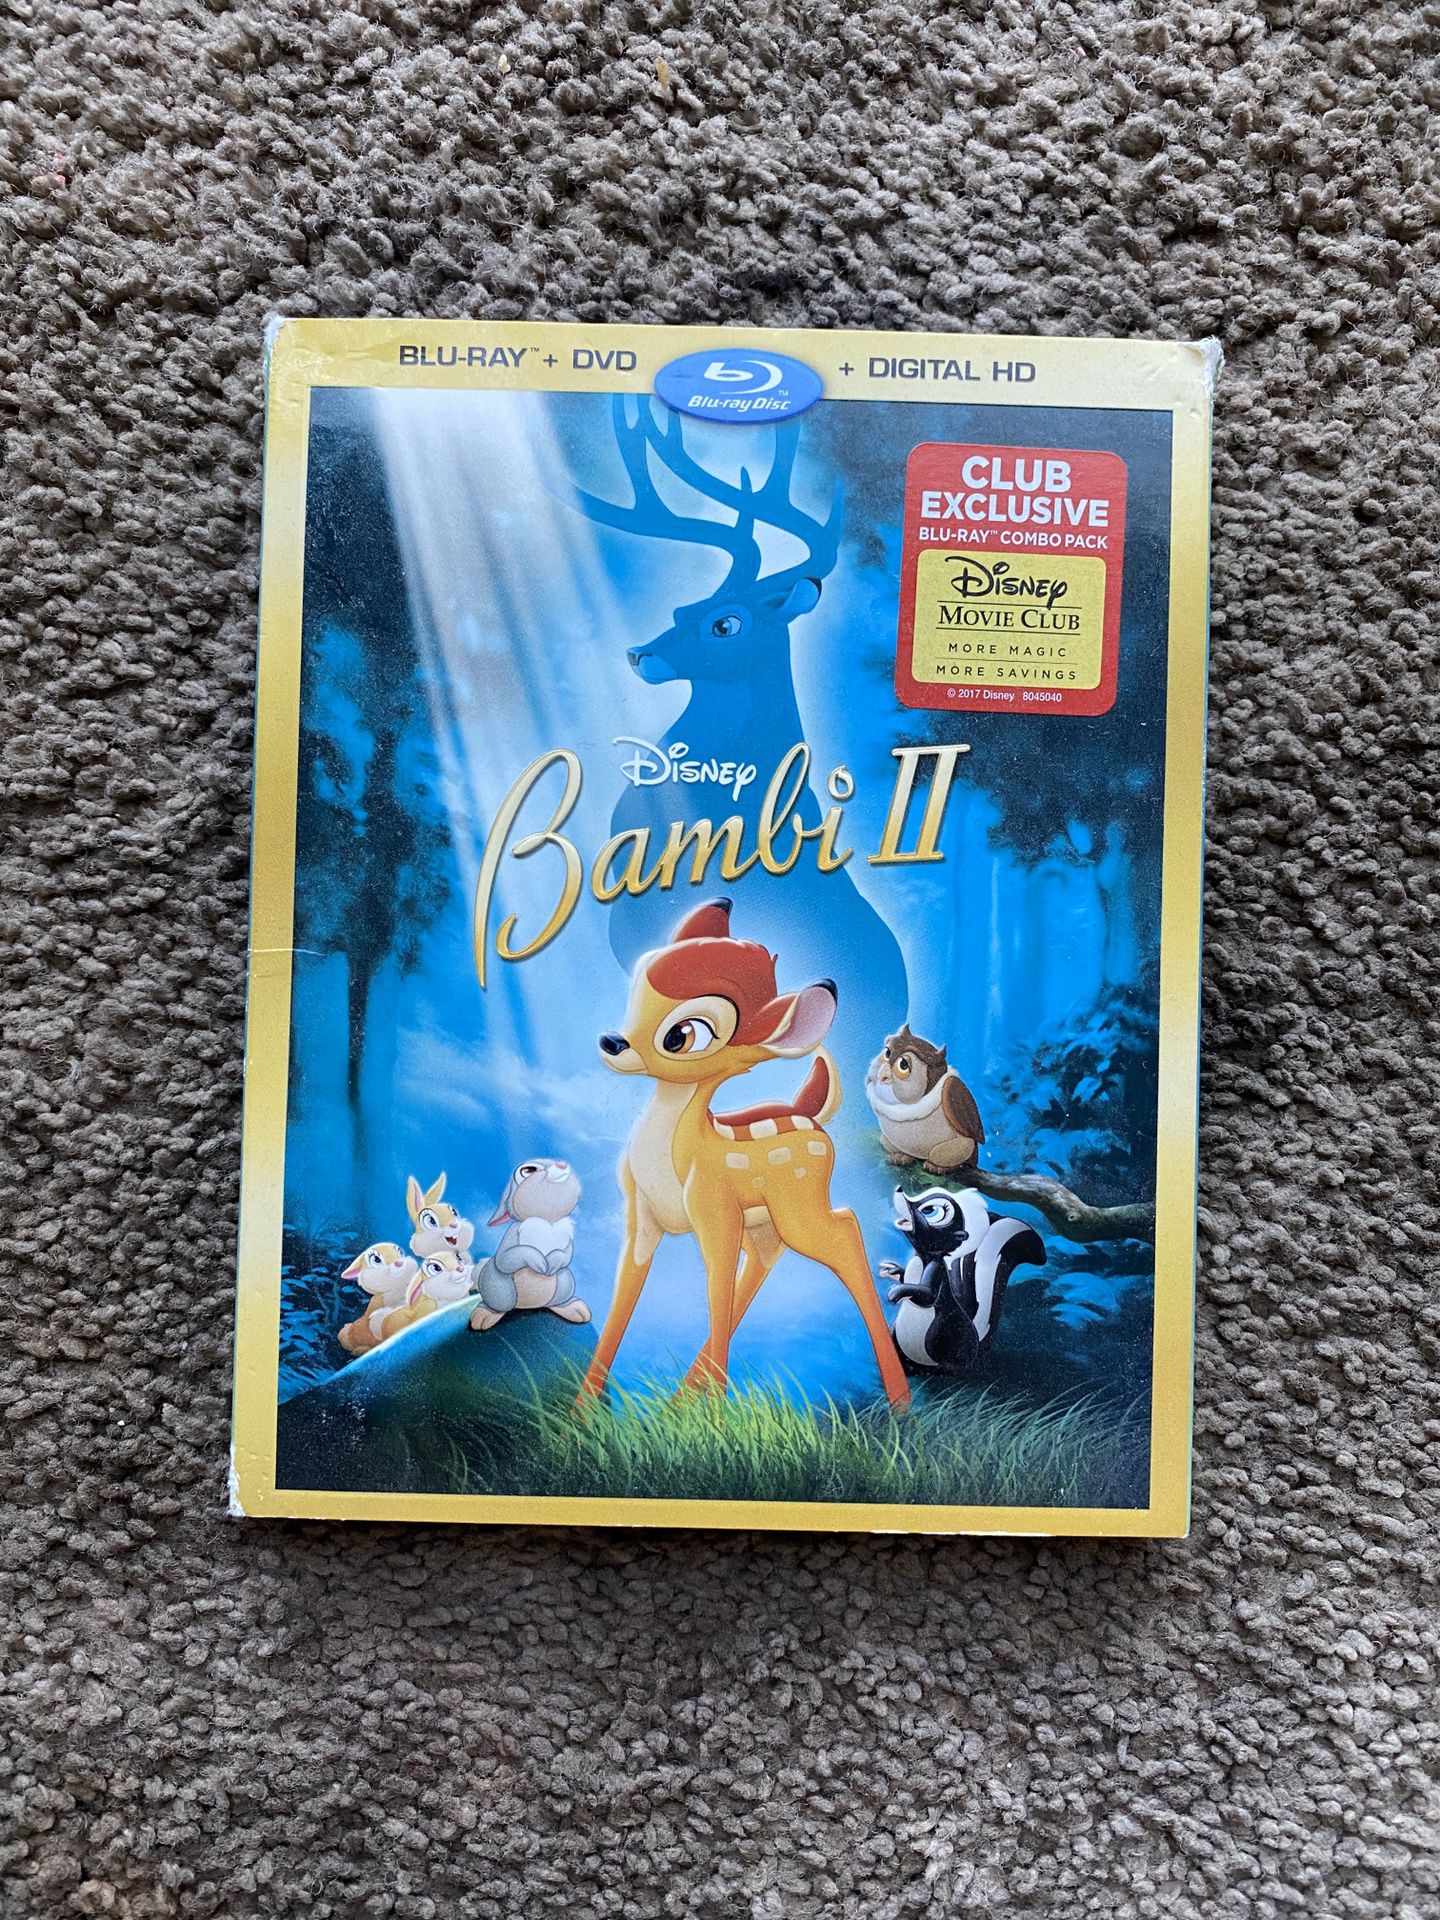 Disney’s Bambi 2